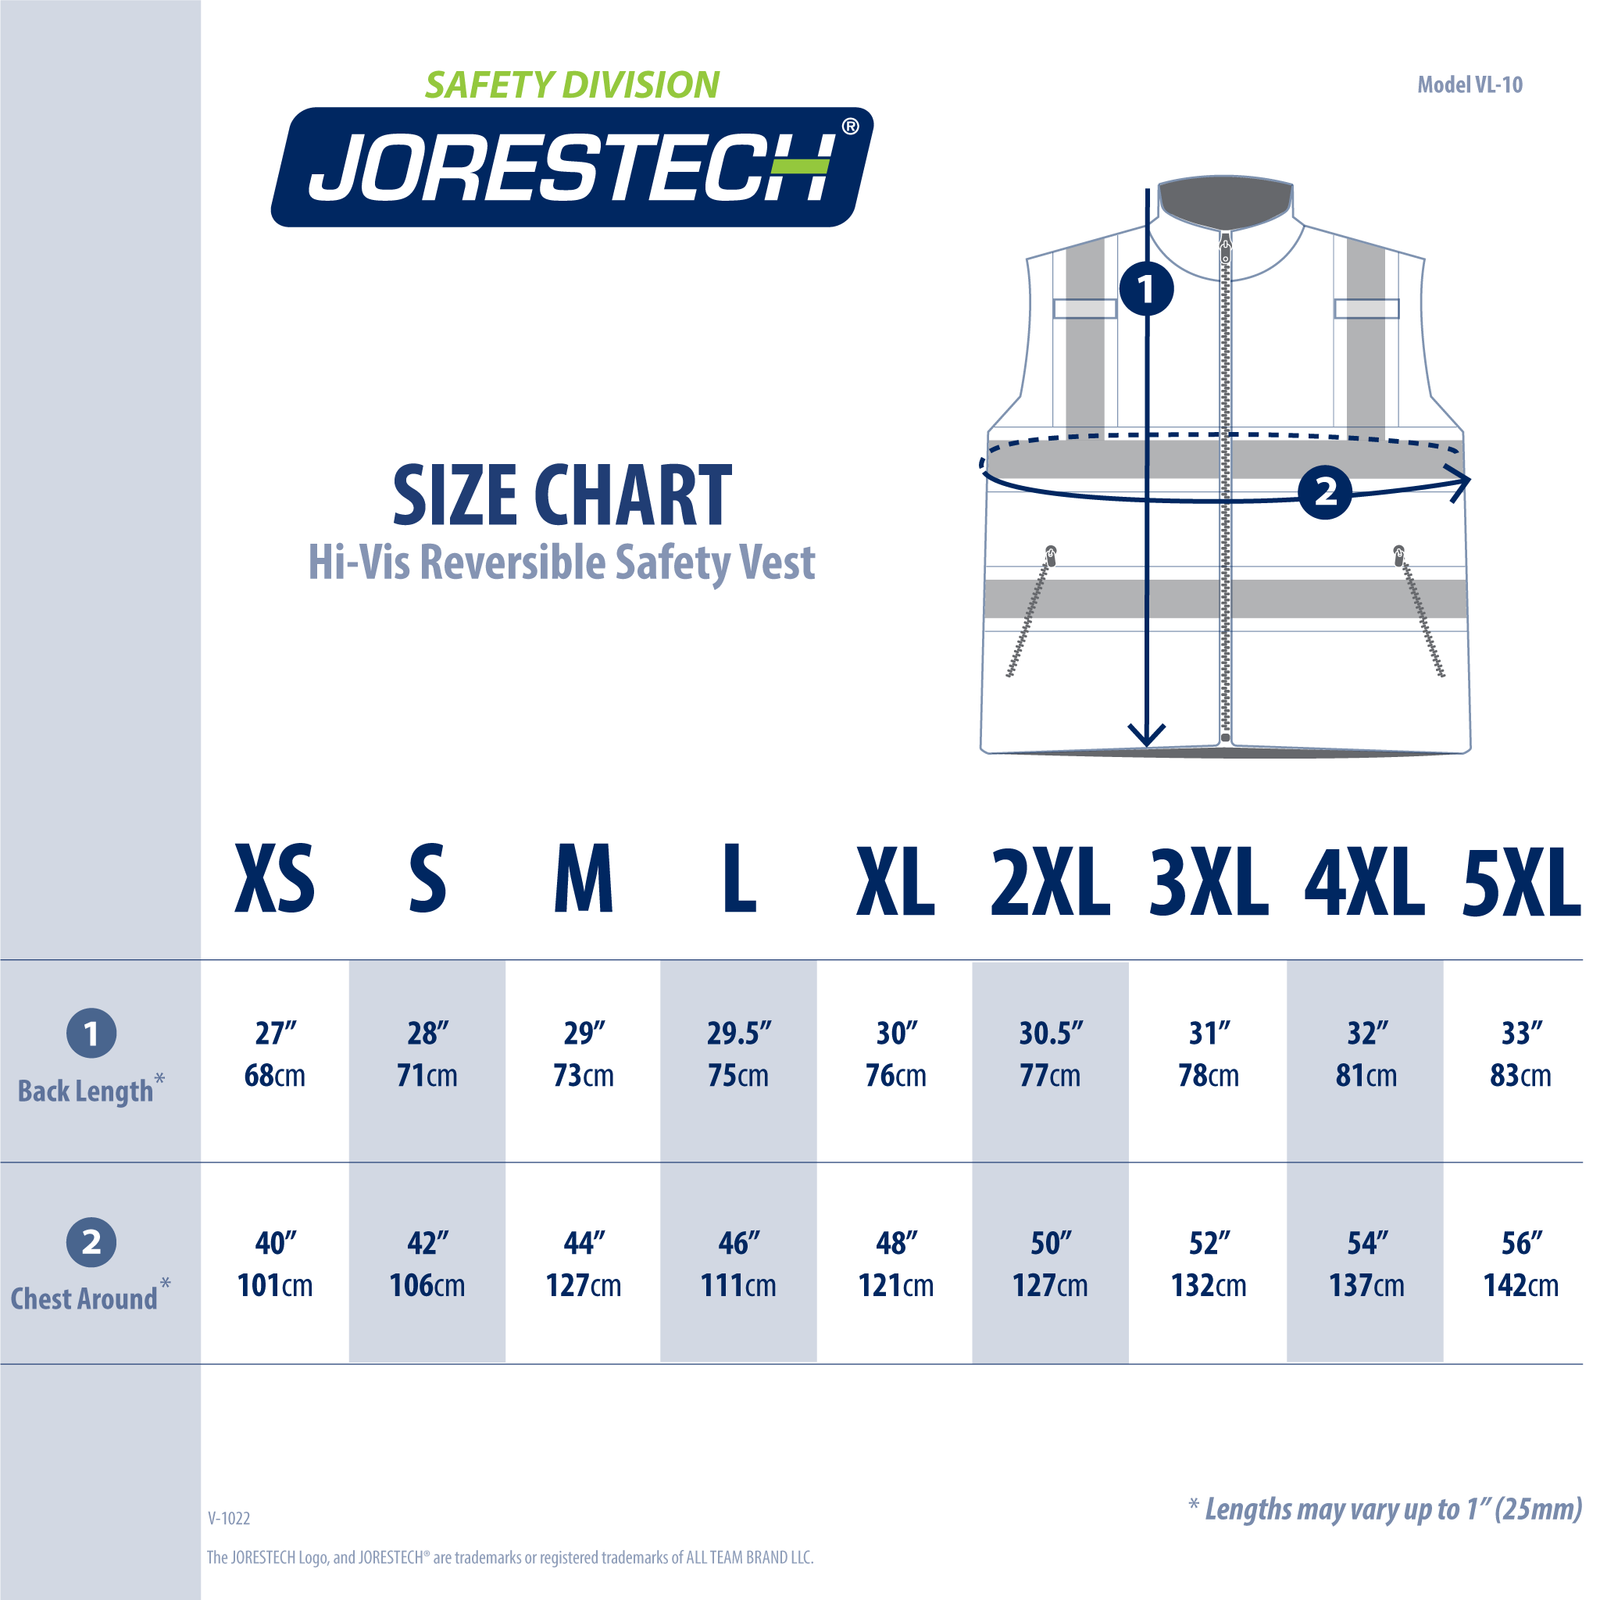 Size chart ANSI class 2 type R safety vest